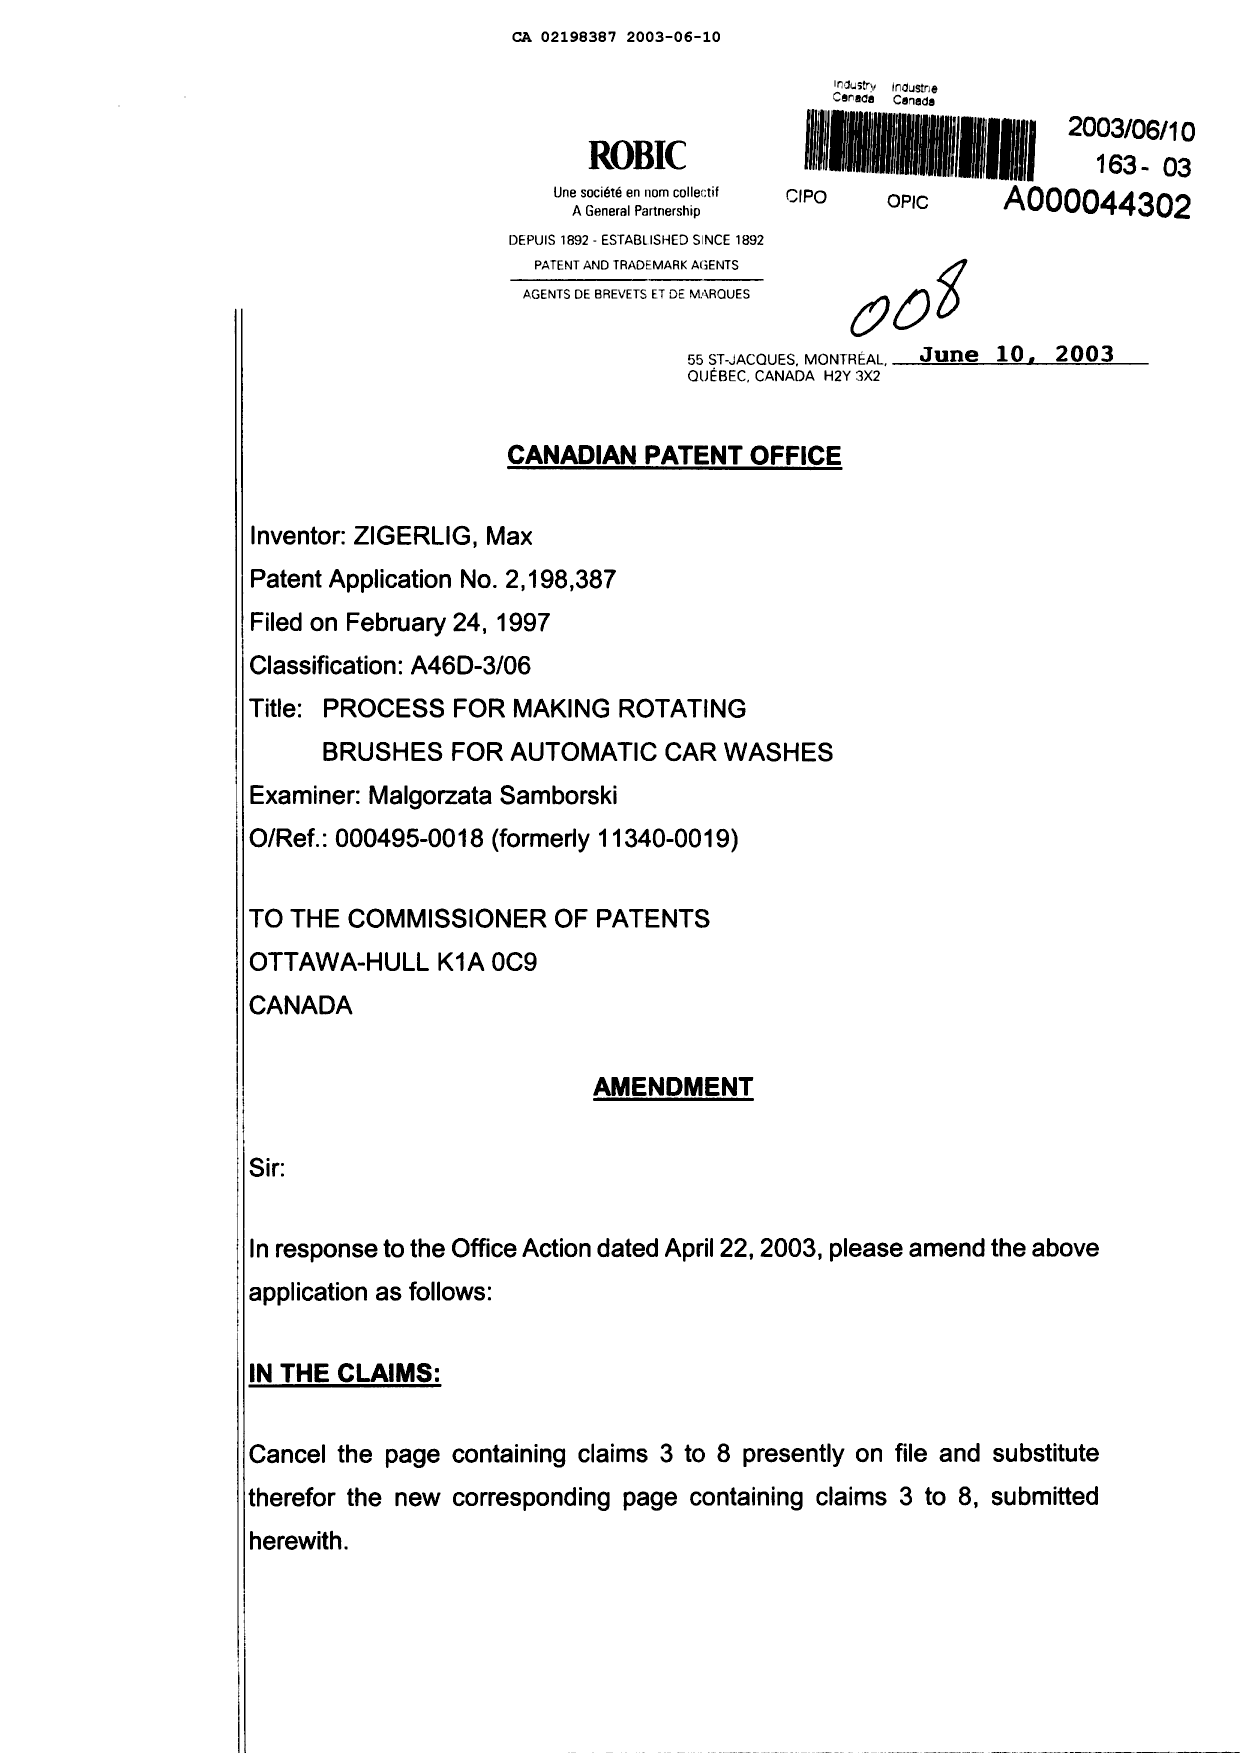 Canadian Patent Document 2198387. Prosecution-Amendment 20030610. Image 1 of 3